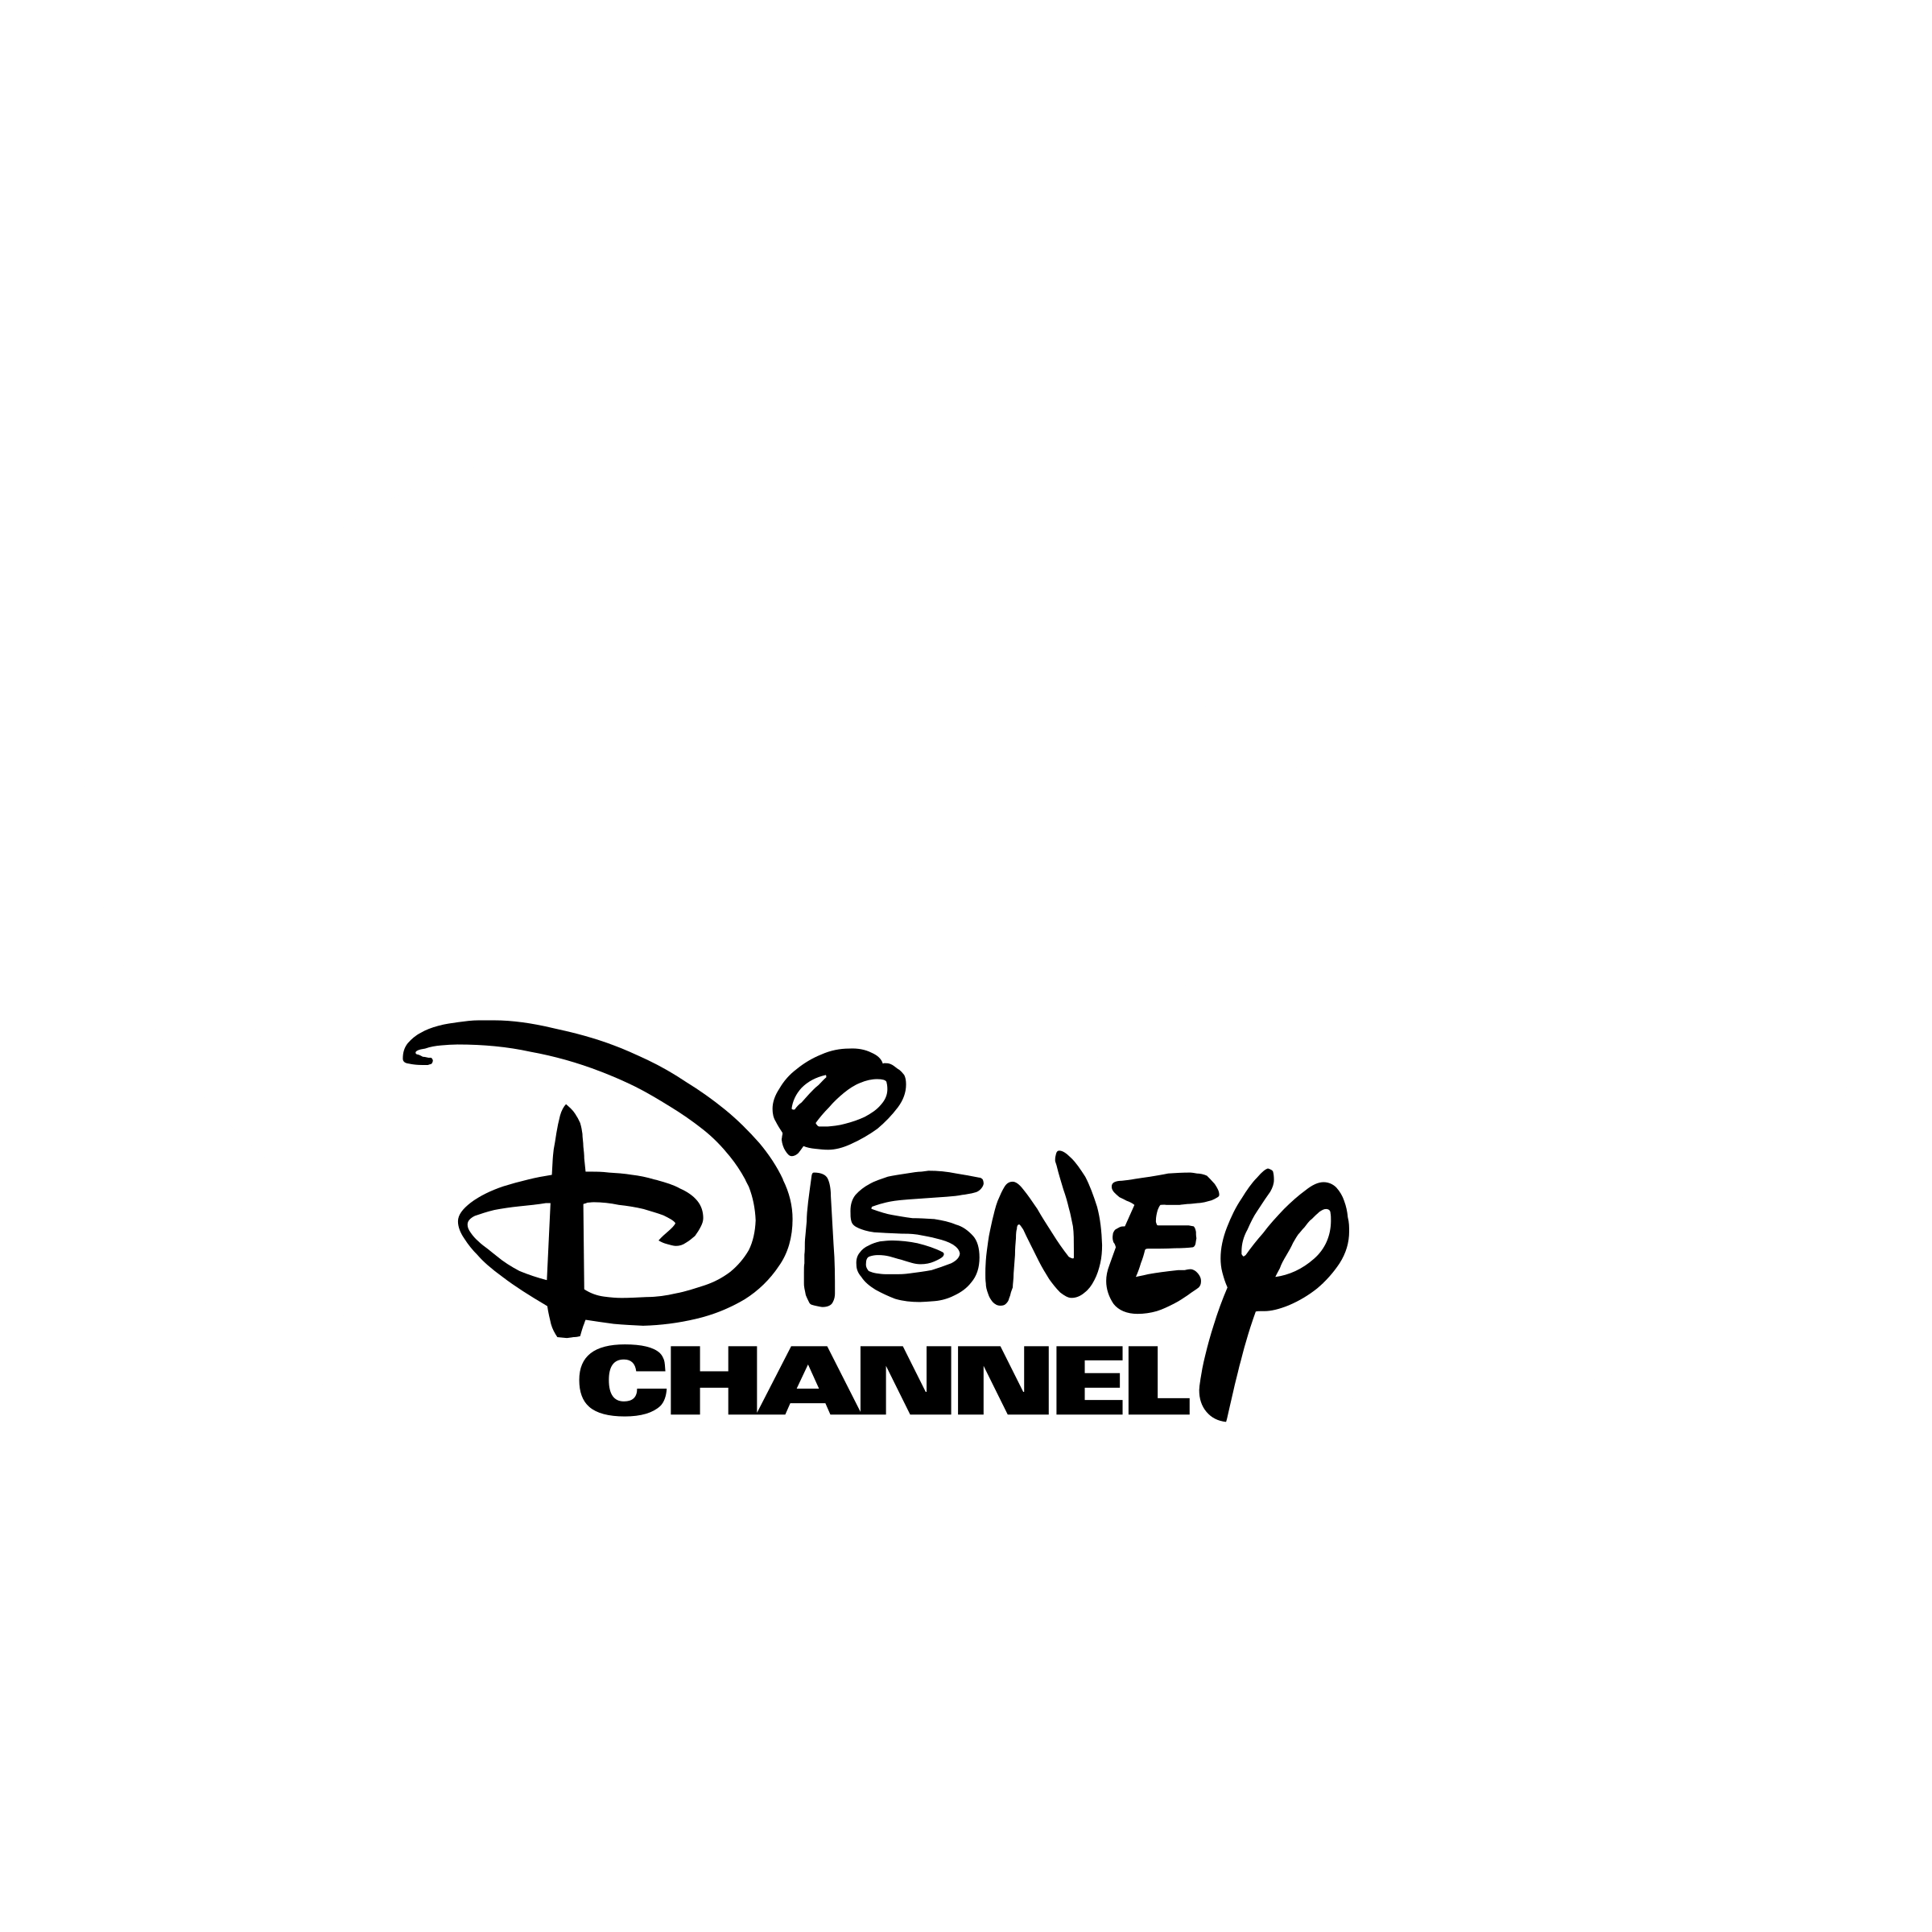 Disney.com Logo - Disney Channel Logo PNG Transparent & SVG Vector